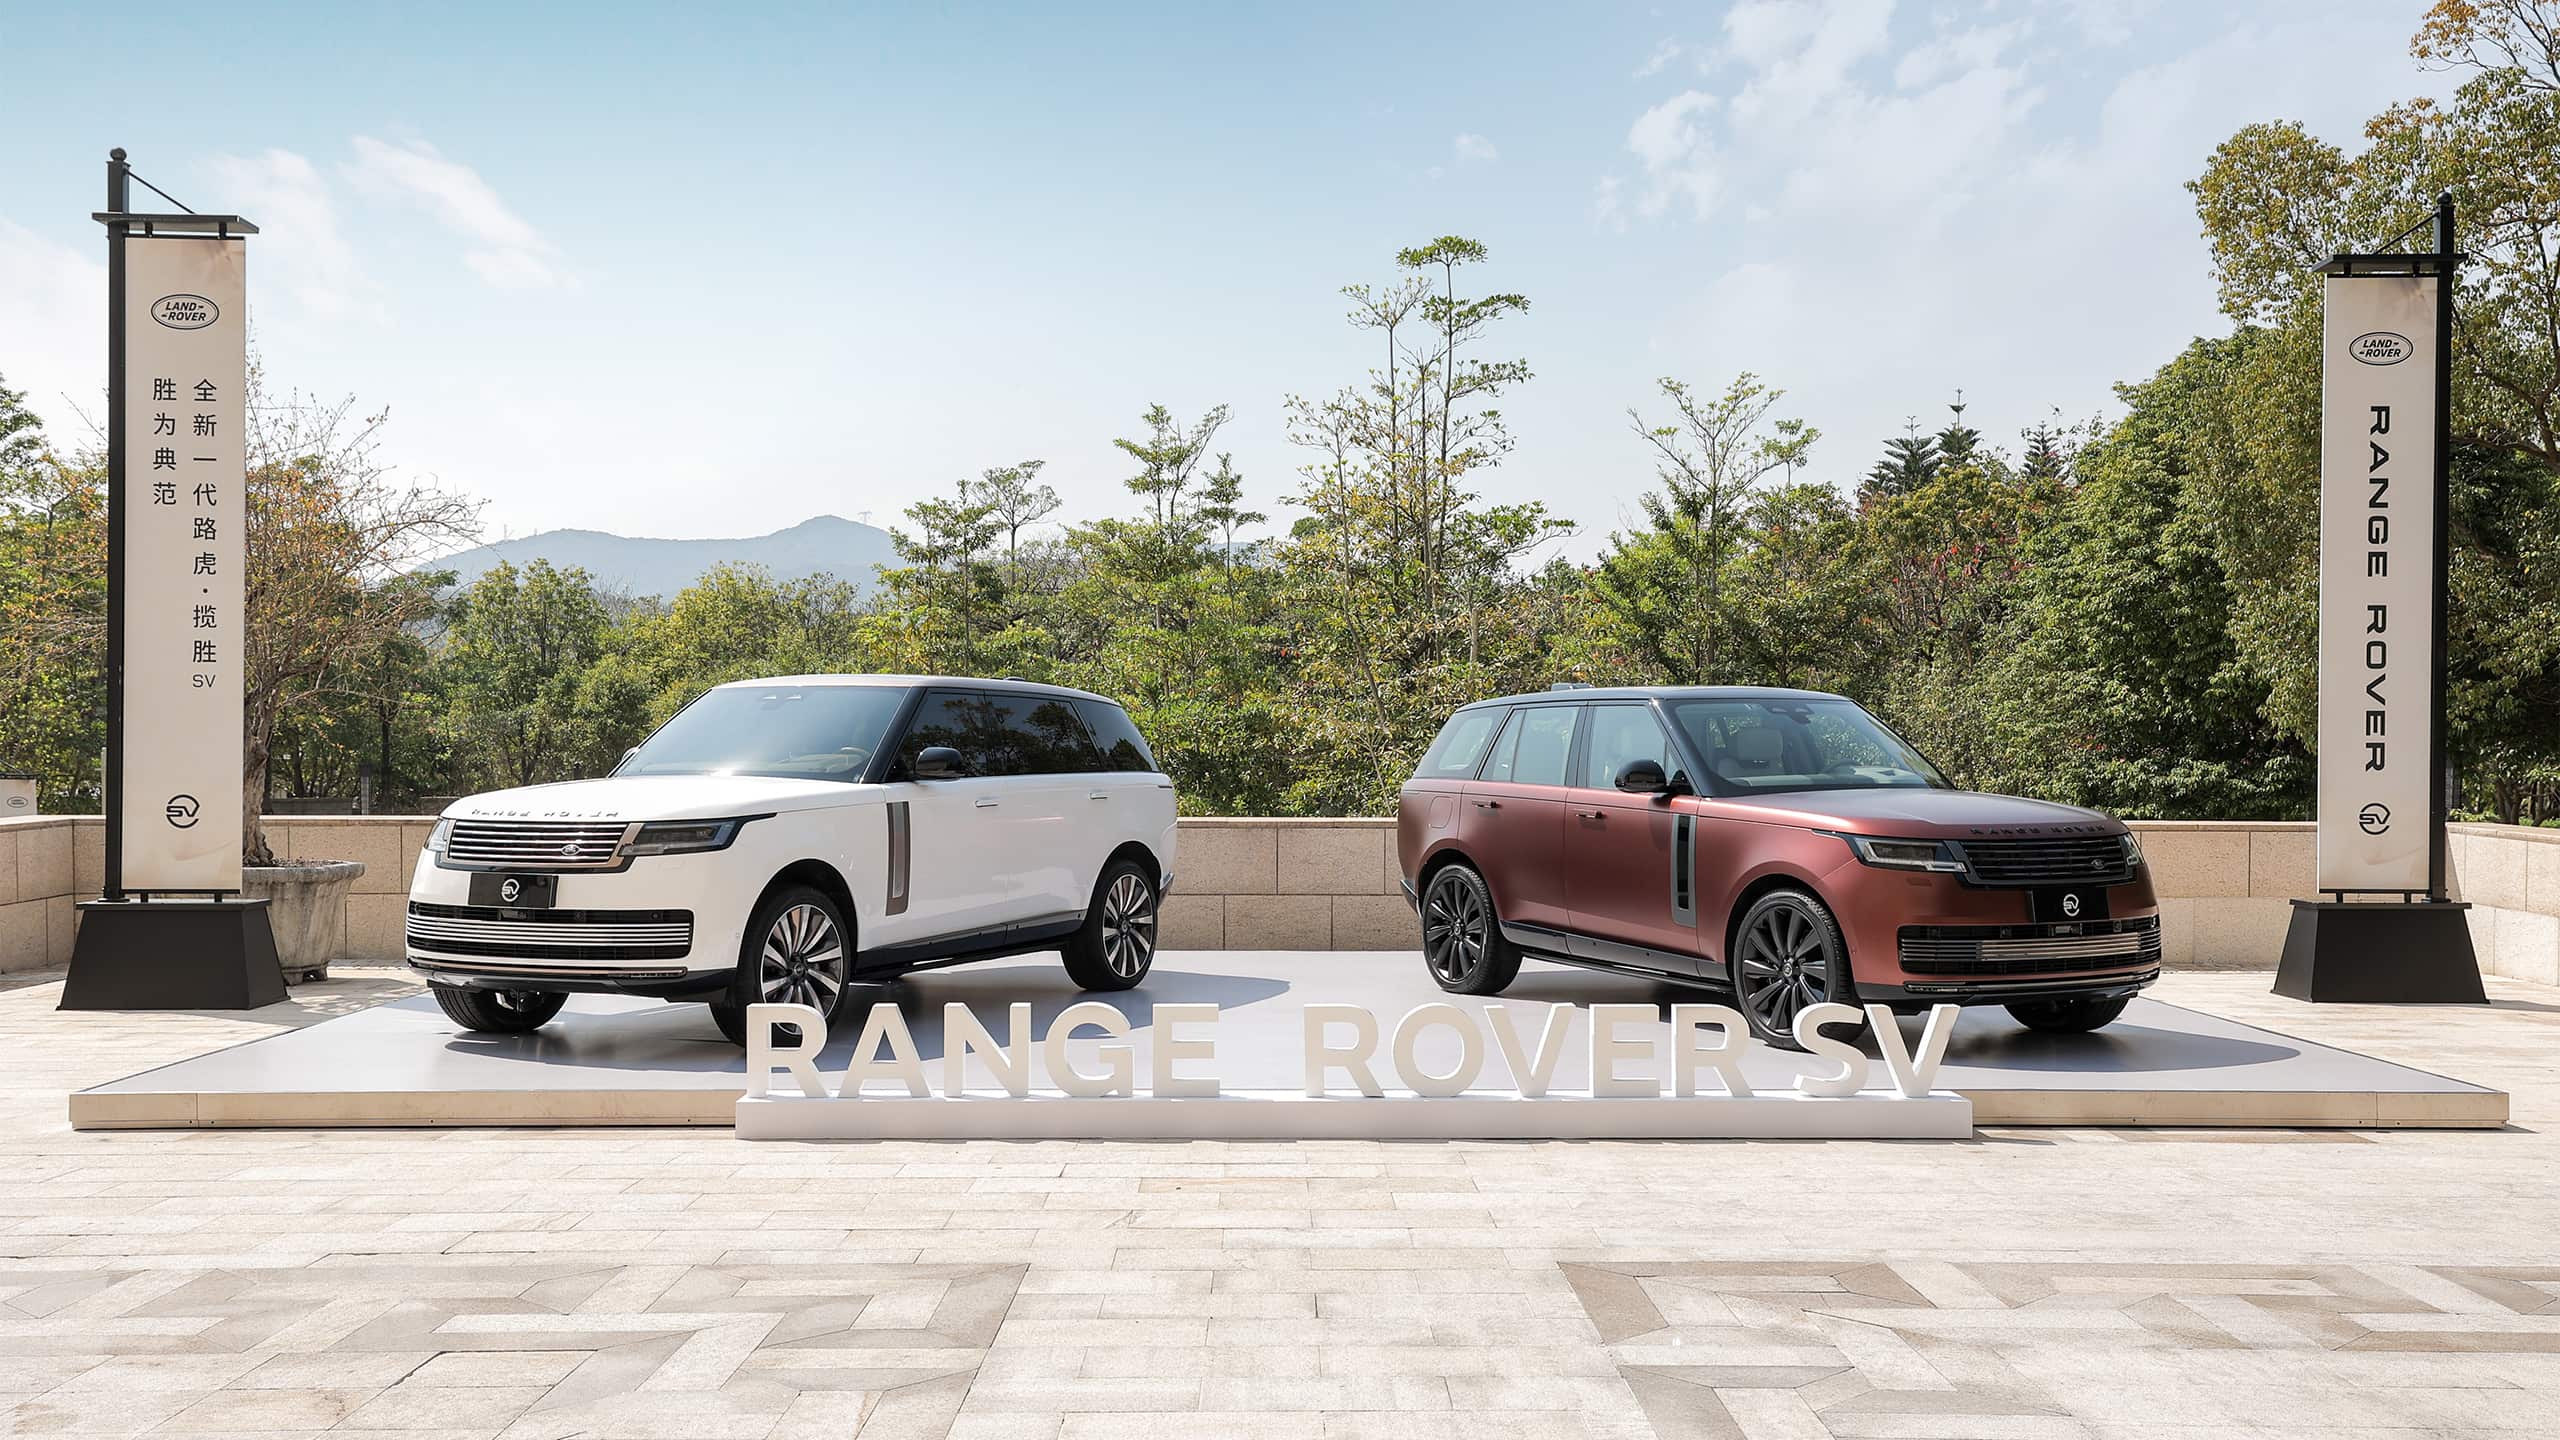 New Generation Range Rover SV luxury and SV sparkle